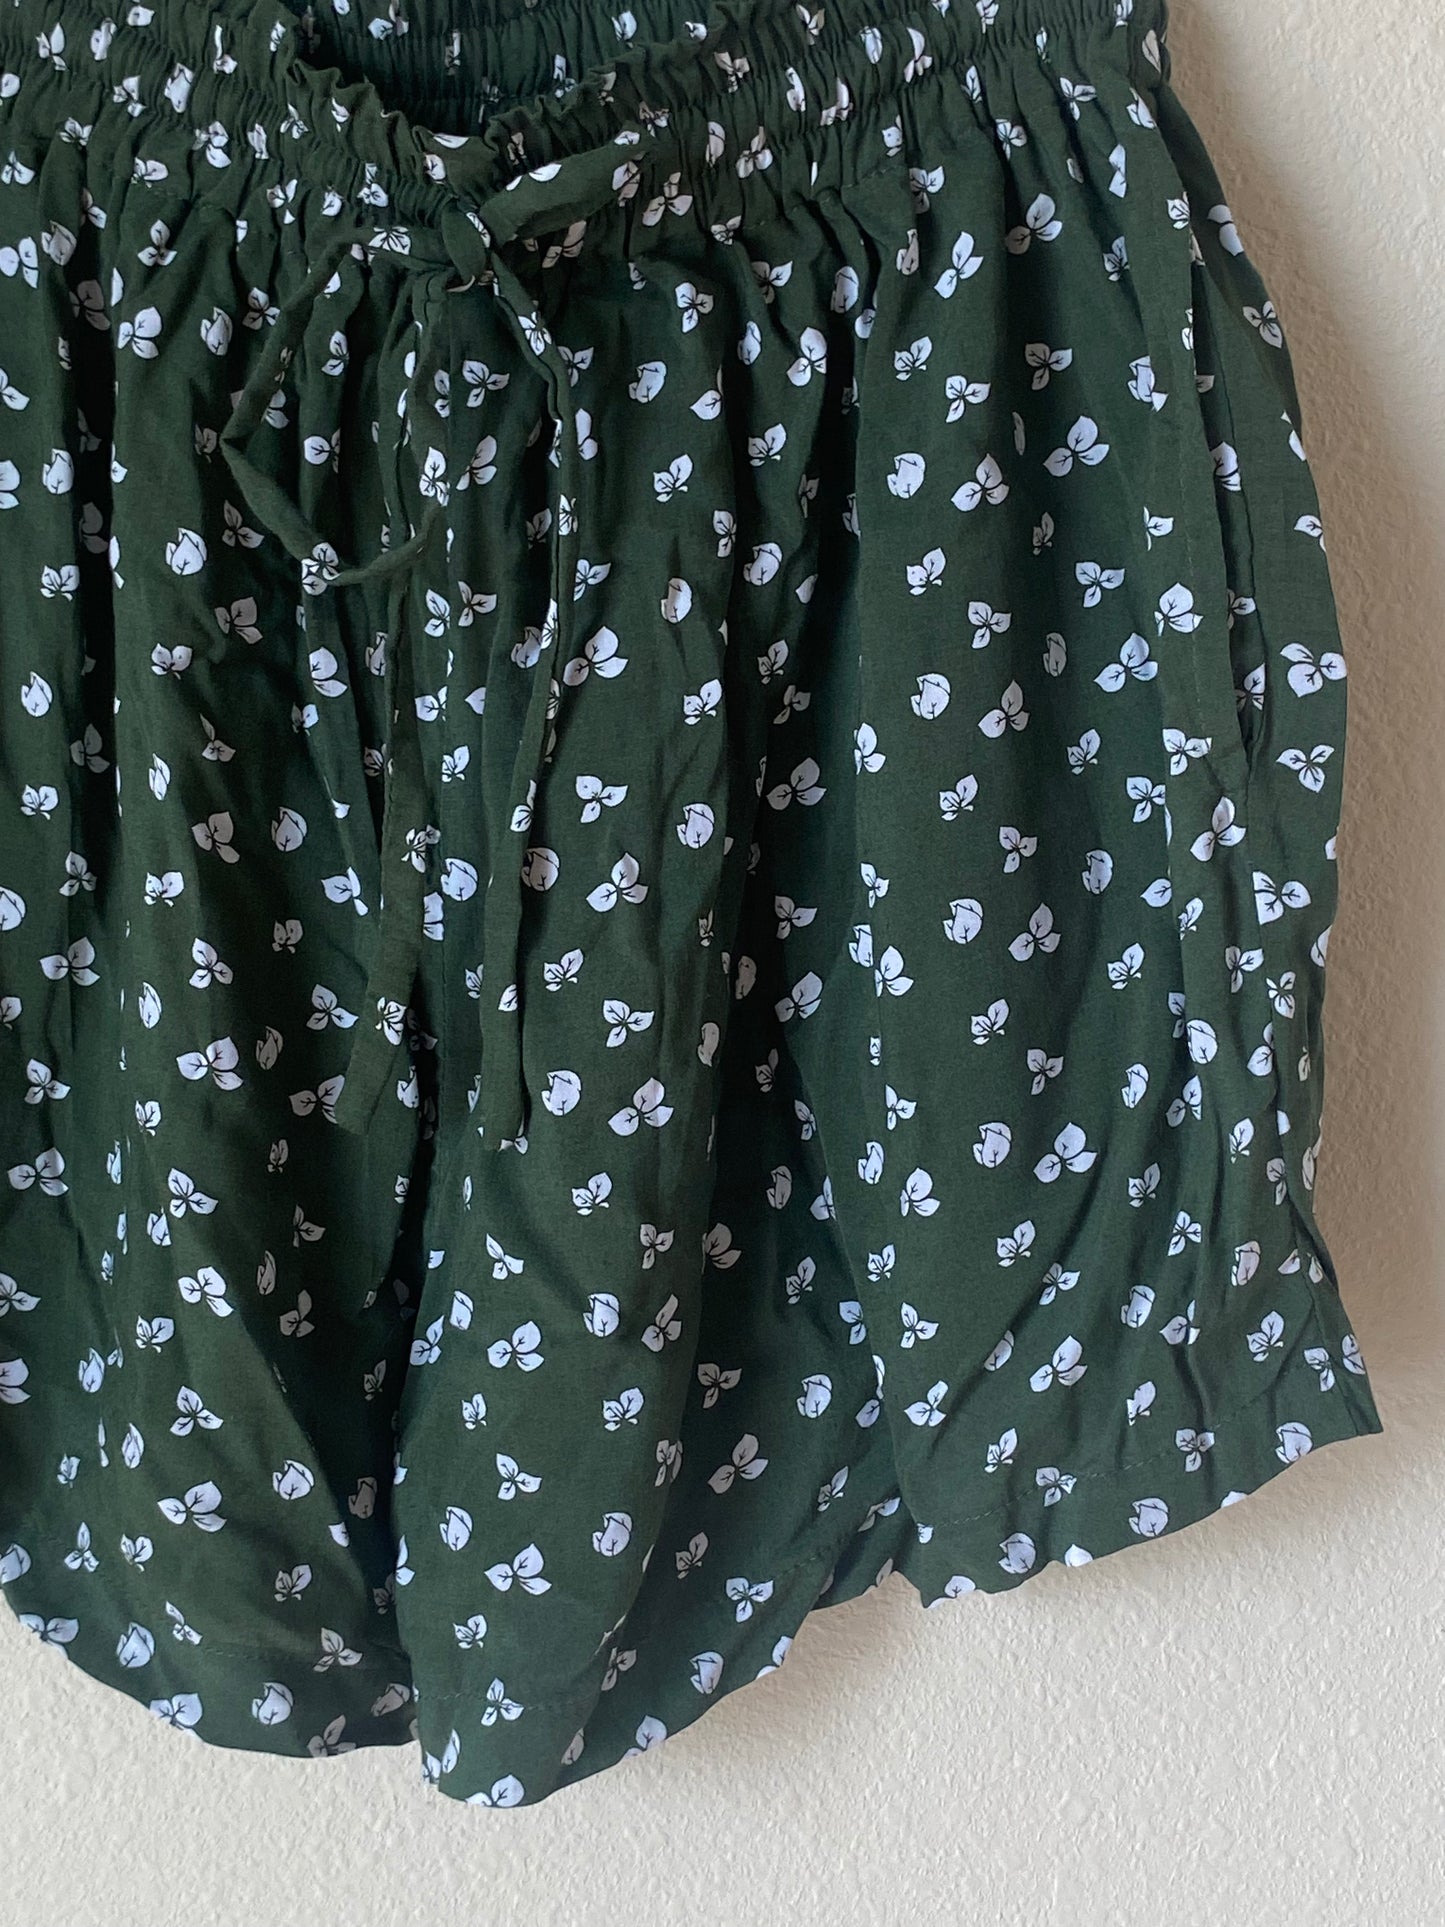 Green Local Girl Floral Adjustable Shorts SMALL/MEDIUM